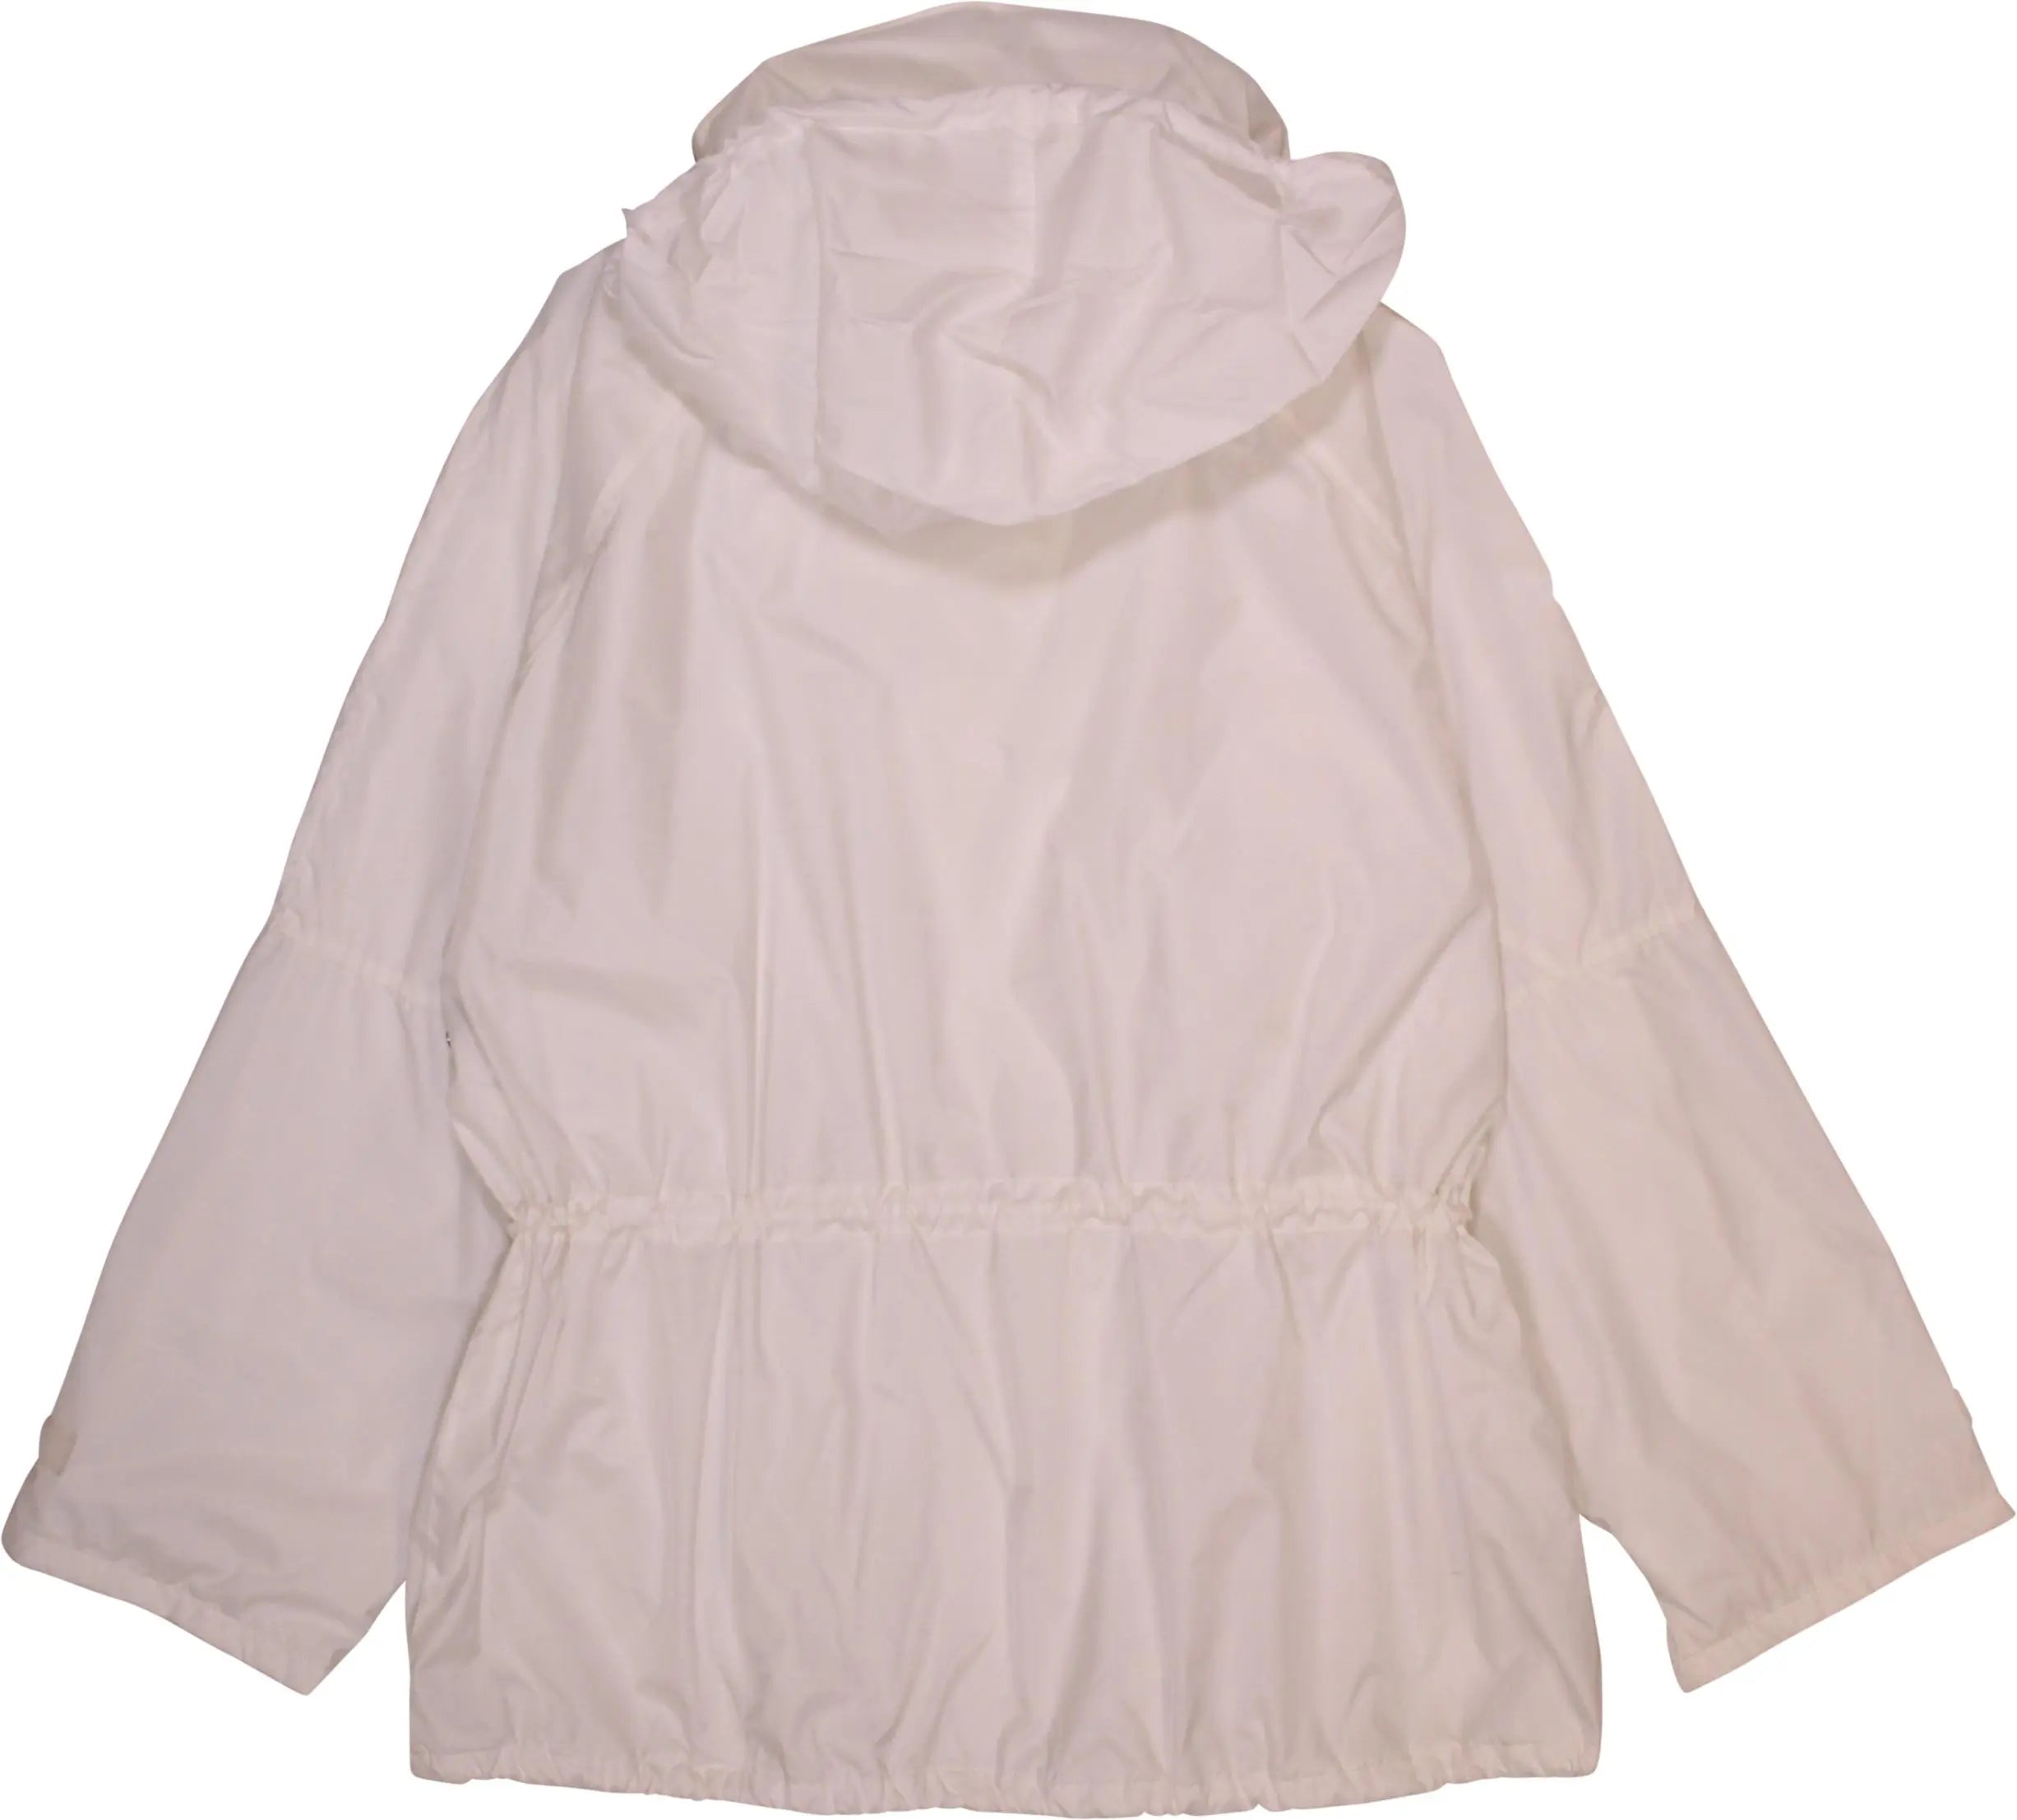 Design Ra Trikora - White Nylon Jacket- ThriftTale.com - Vintage and second handclothing